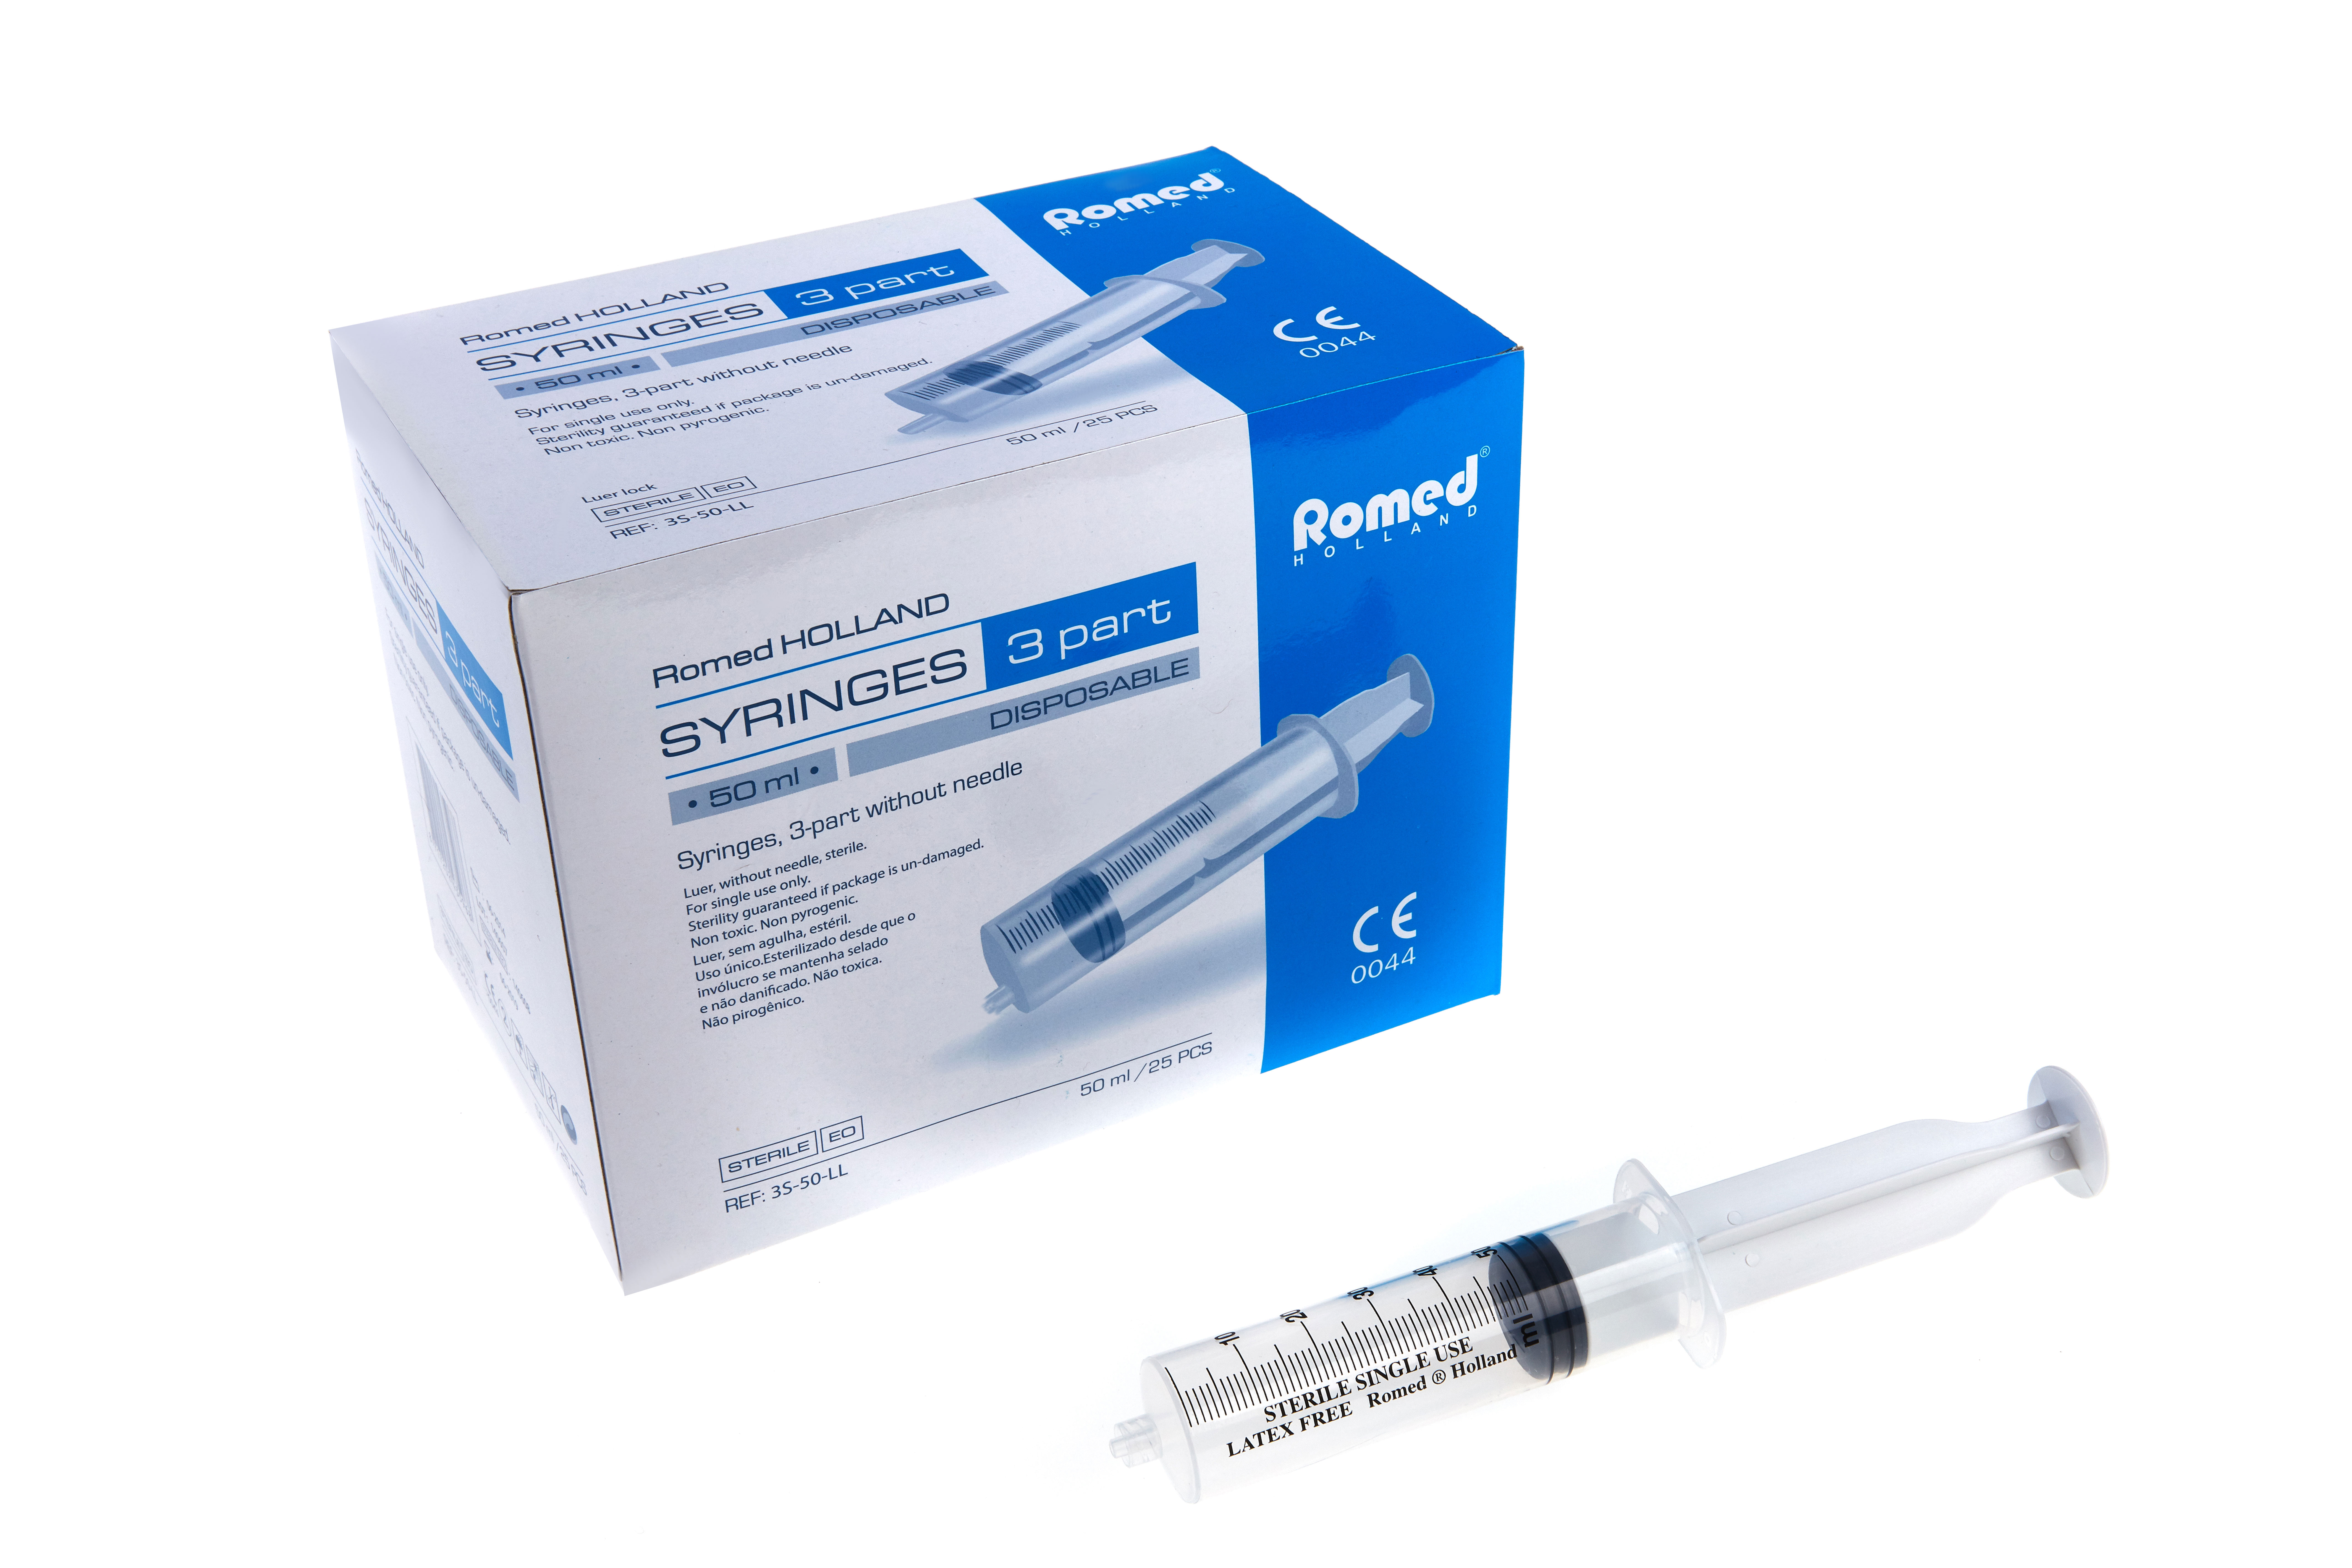 3-part syringes 50ml